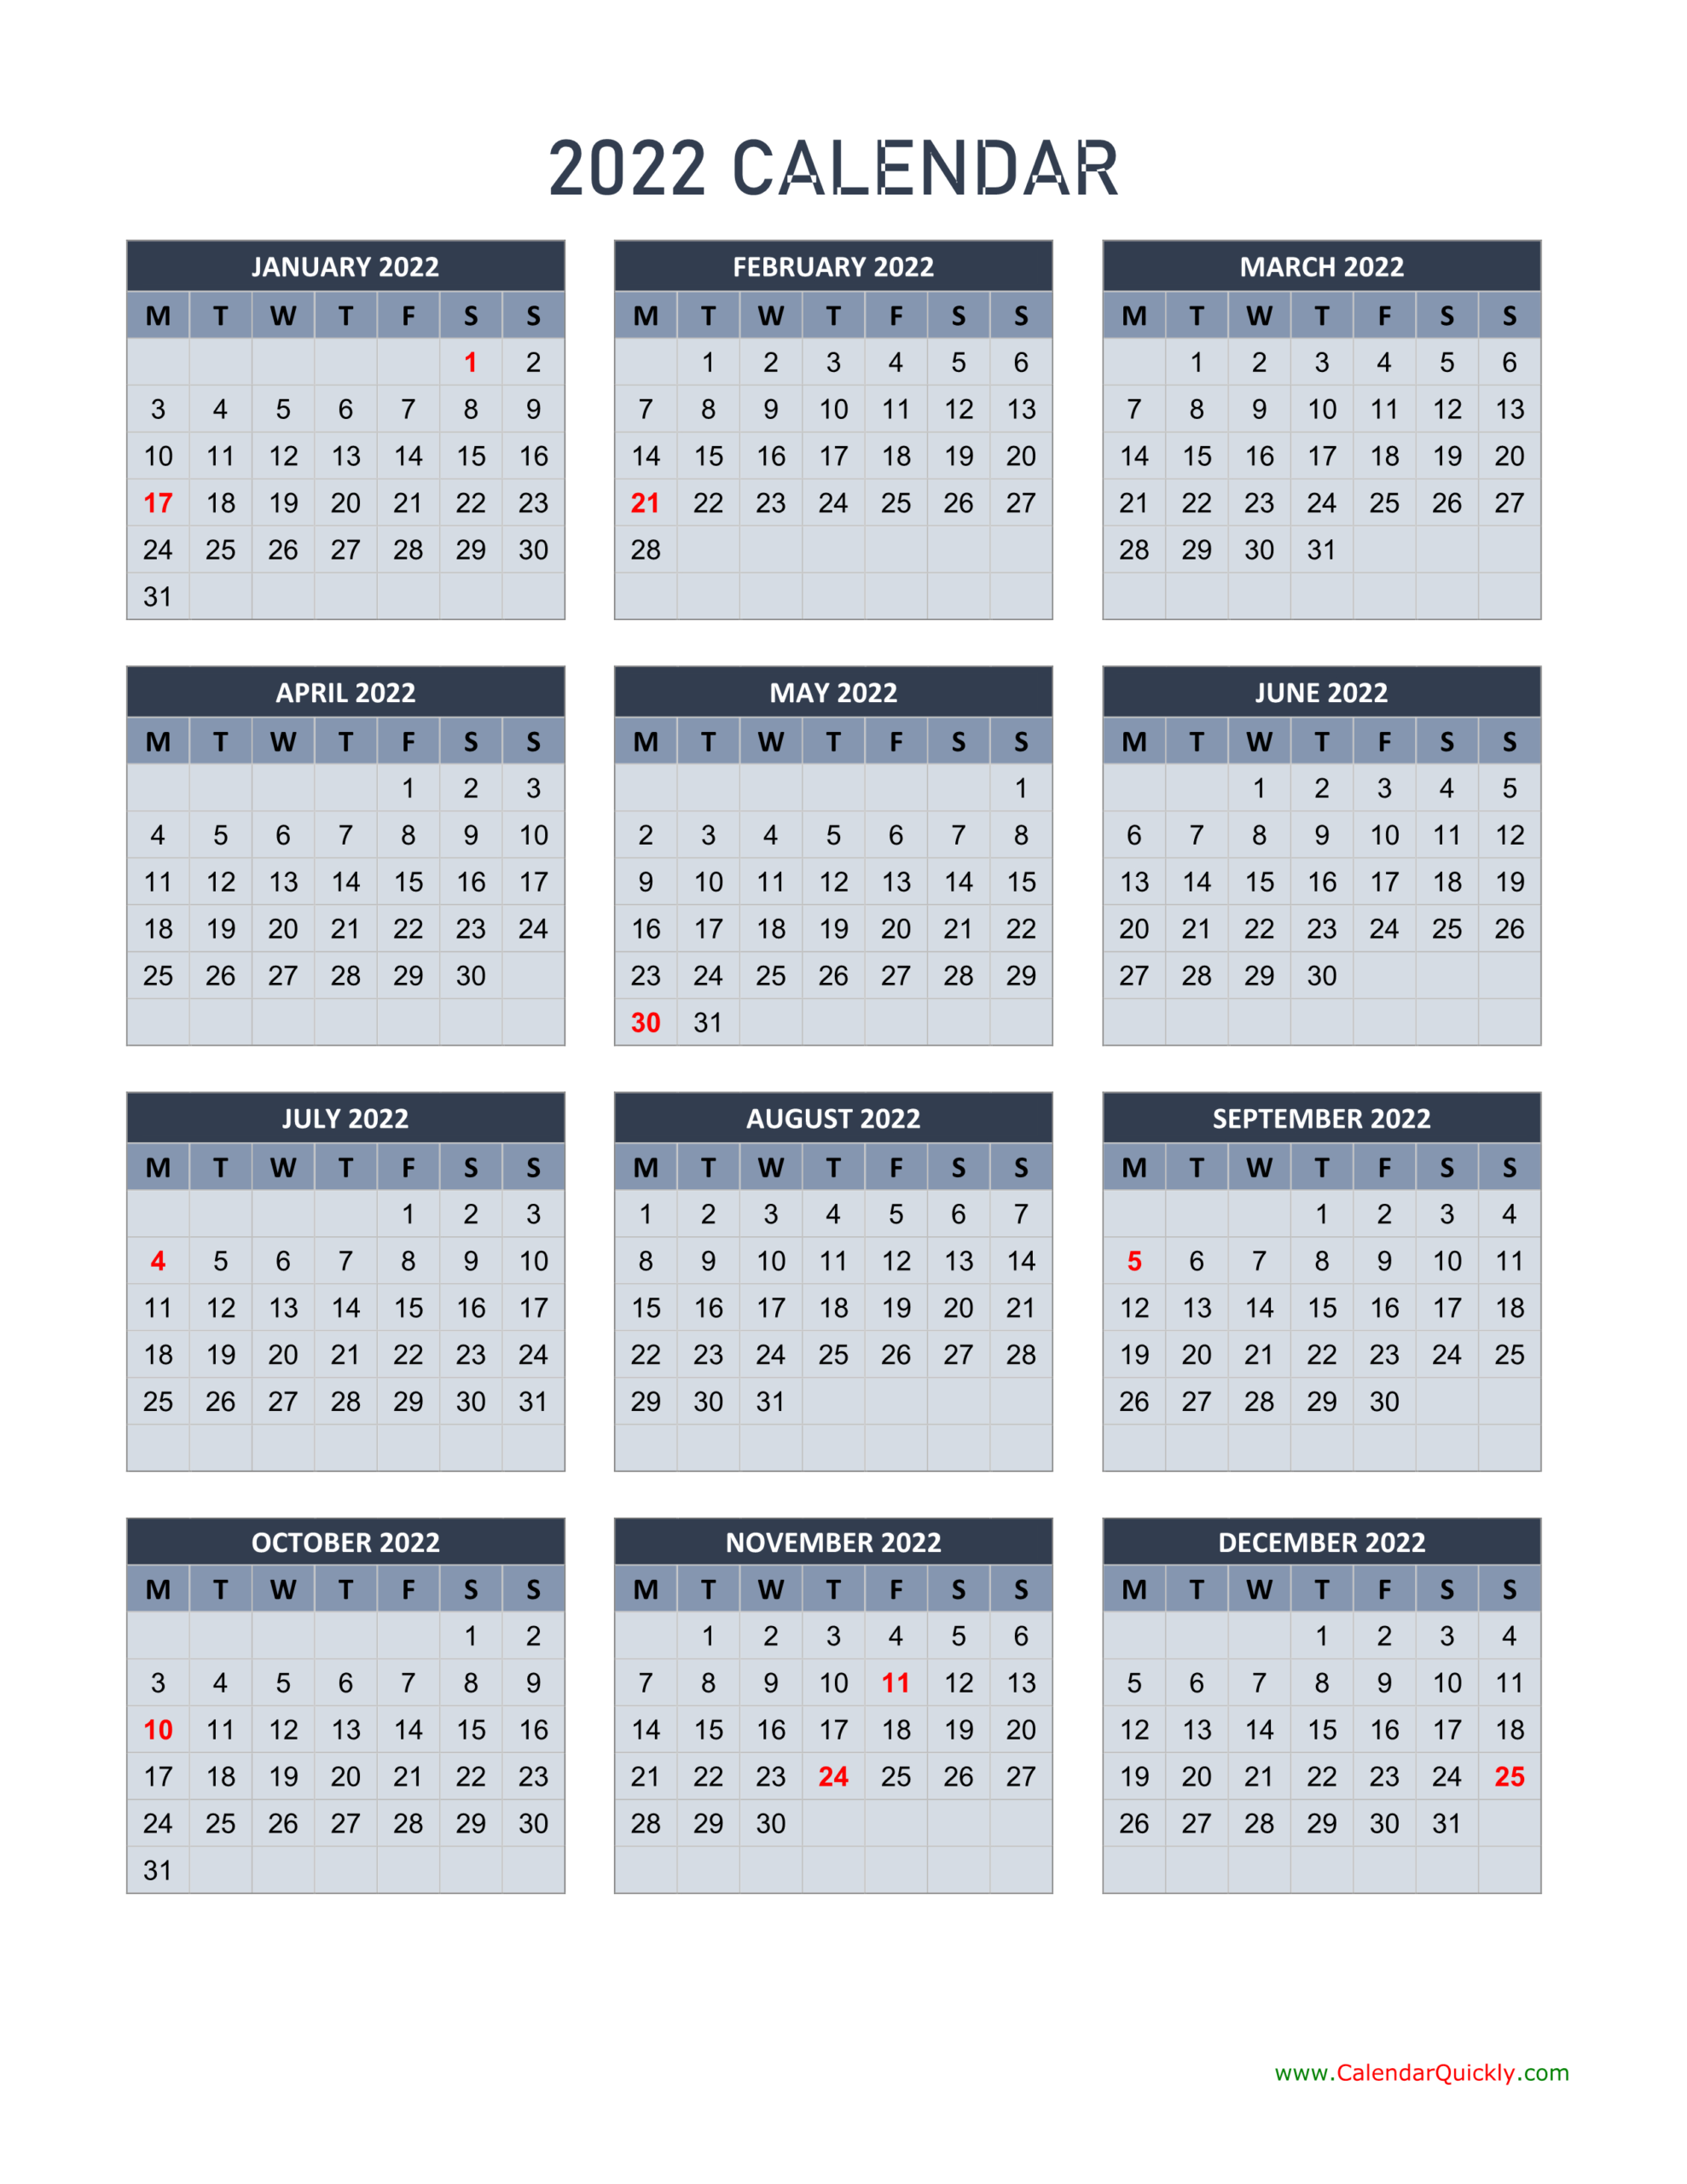 Monday 2022 Calendar Vertical | Calendar Quickly pertaining to Next Year Calendar 2022